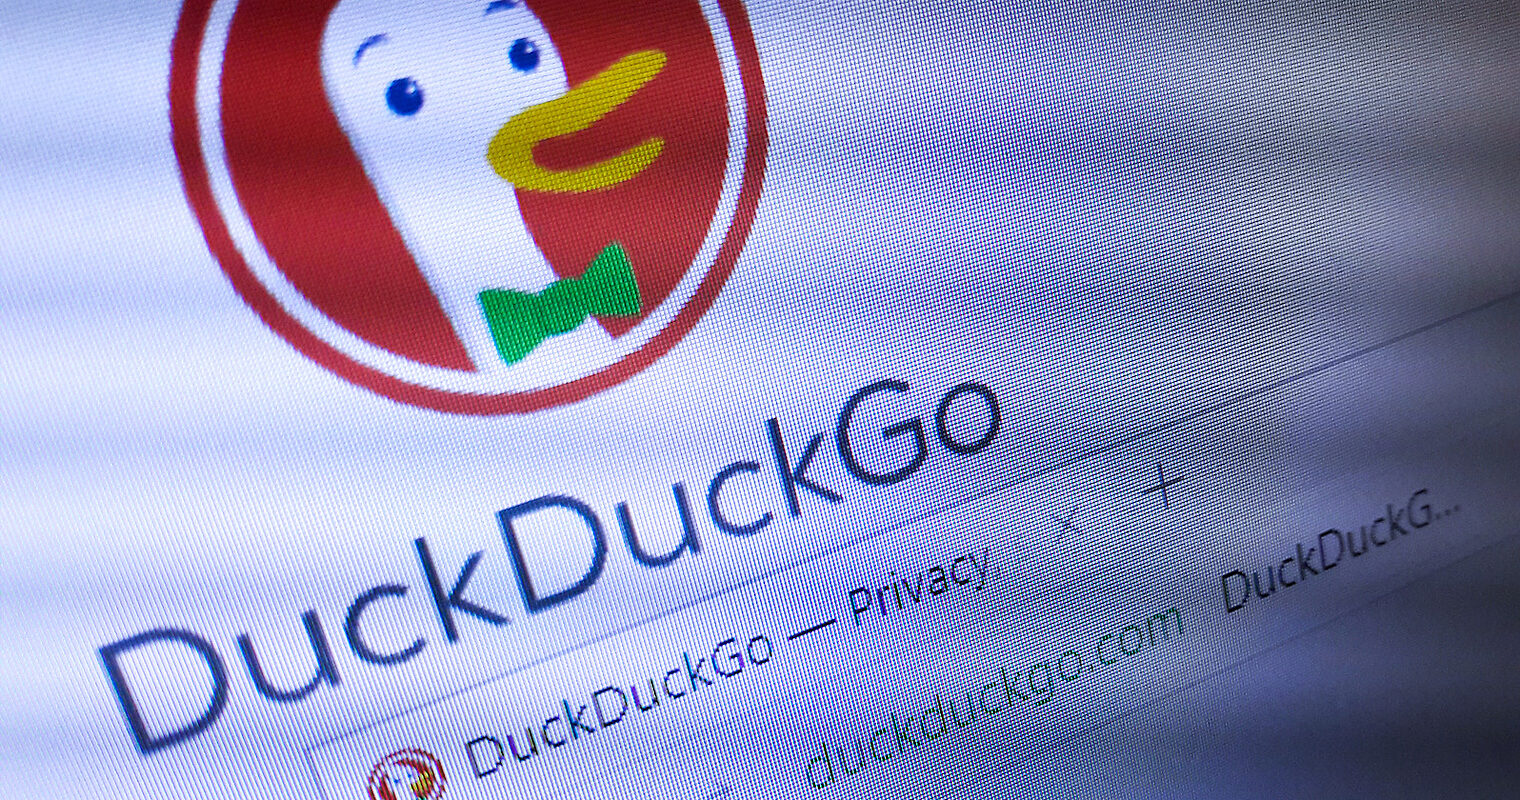 DuckDuckGo Receives Endorsement From Twitter CEO Jack Dorsey